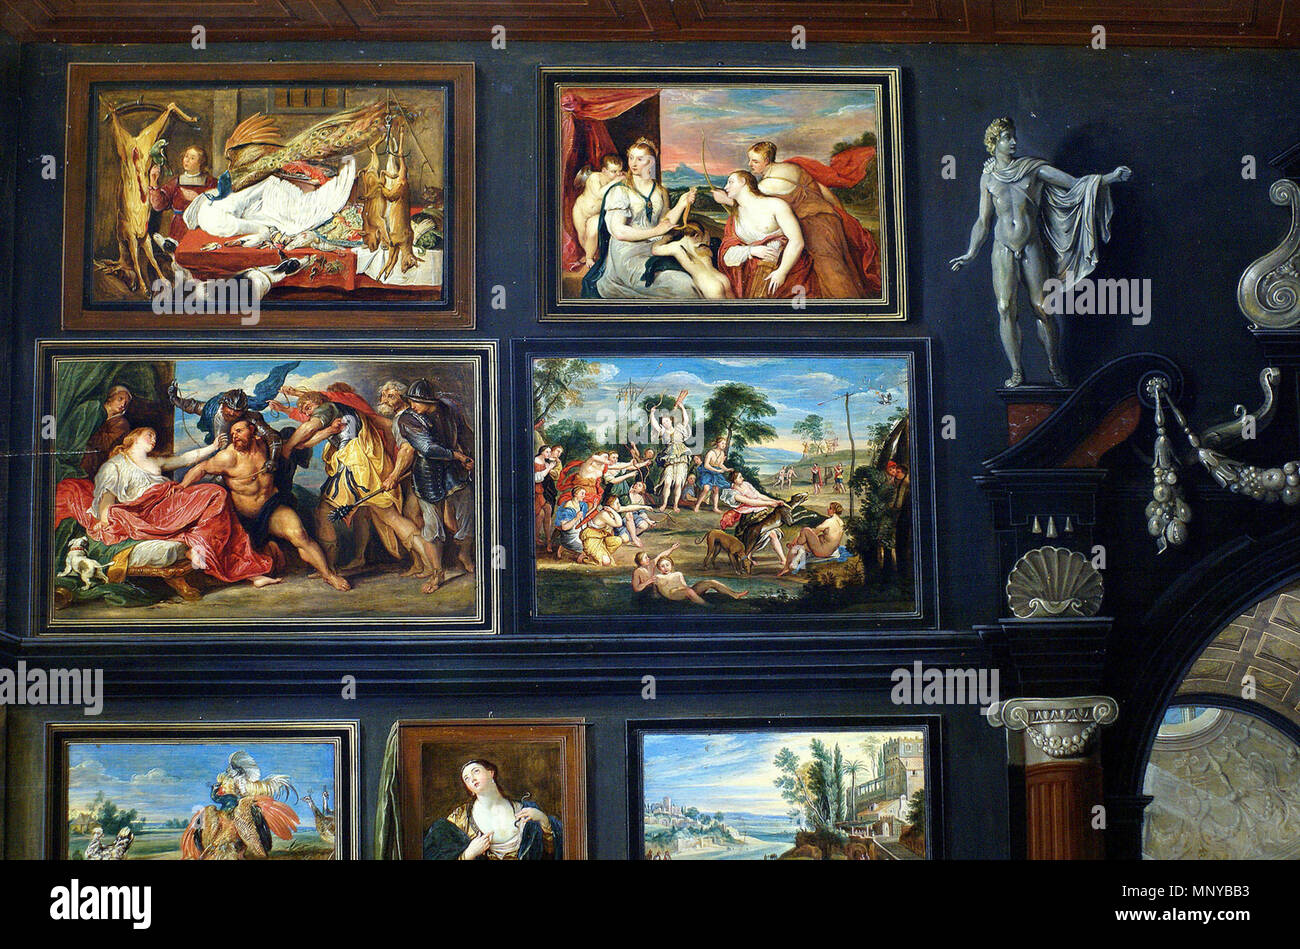 Apelles Malerei Campaspe, Detail ca. 1630. 1261 Willem van Haecht - Apelles Malerei Campaspe - Detail Rückwand Stockfoto